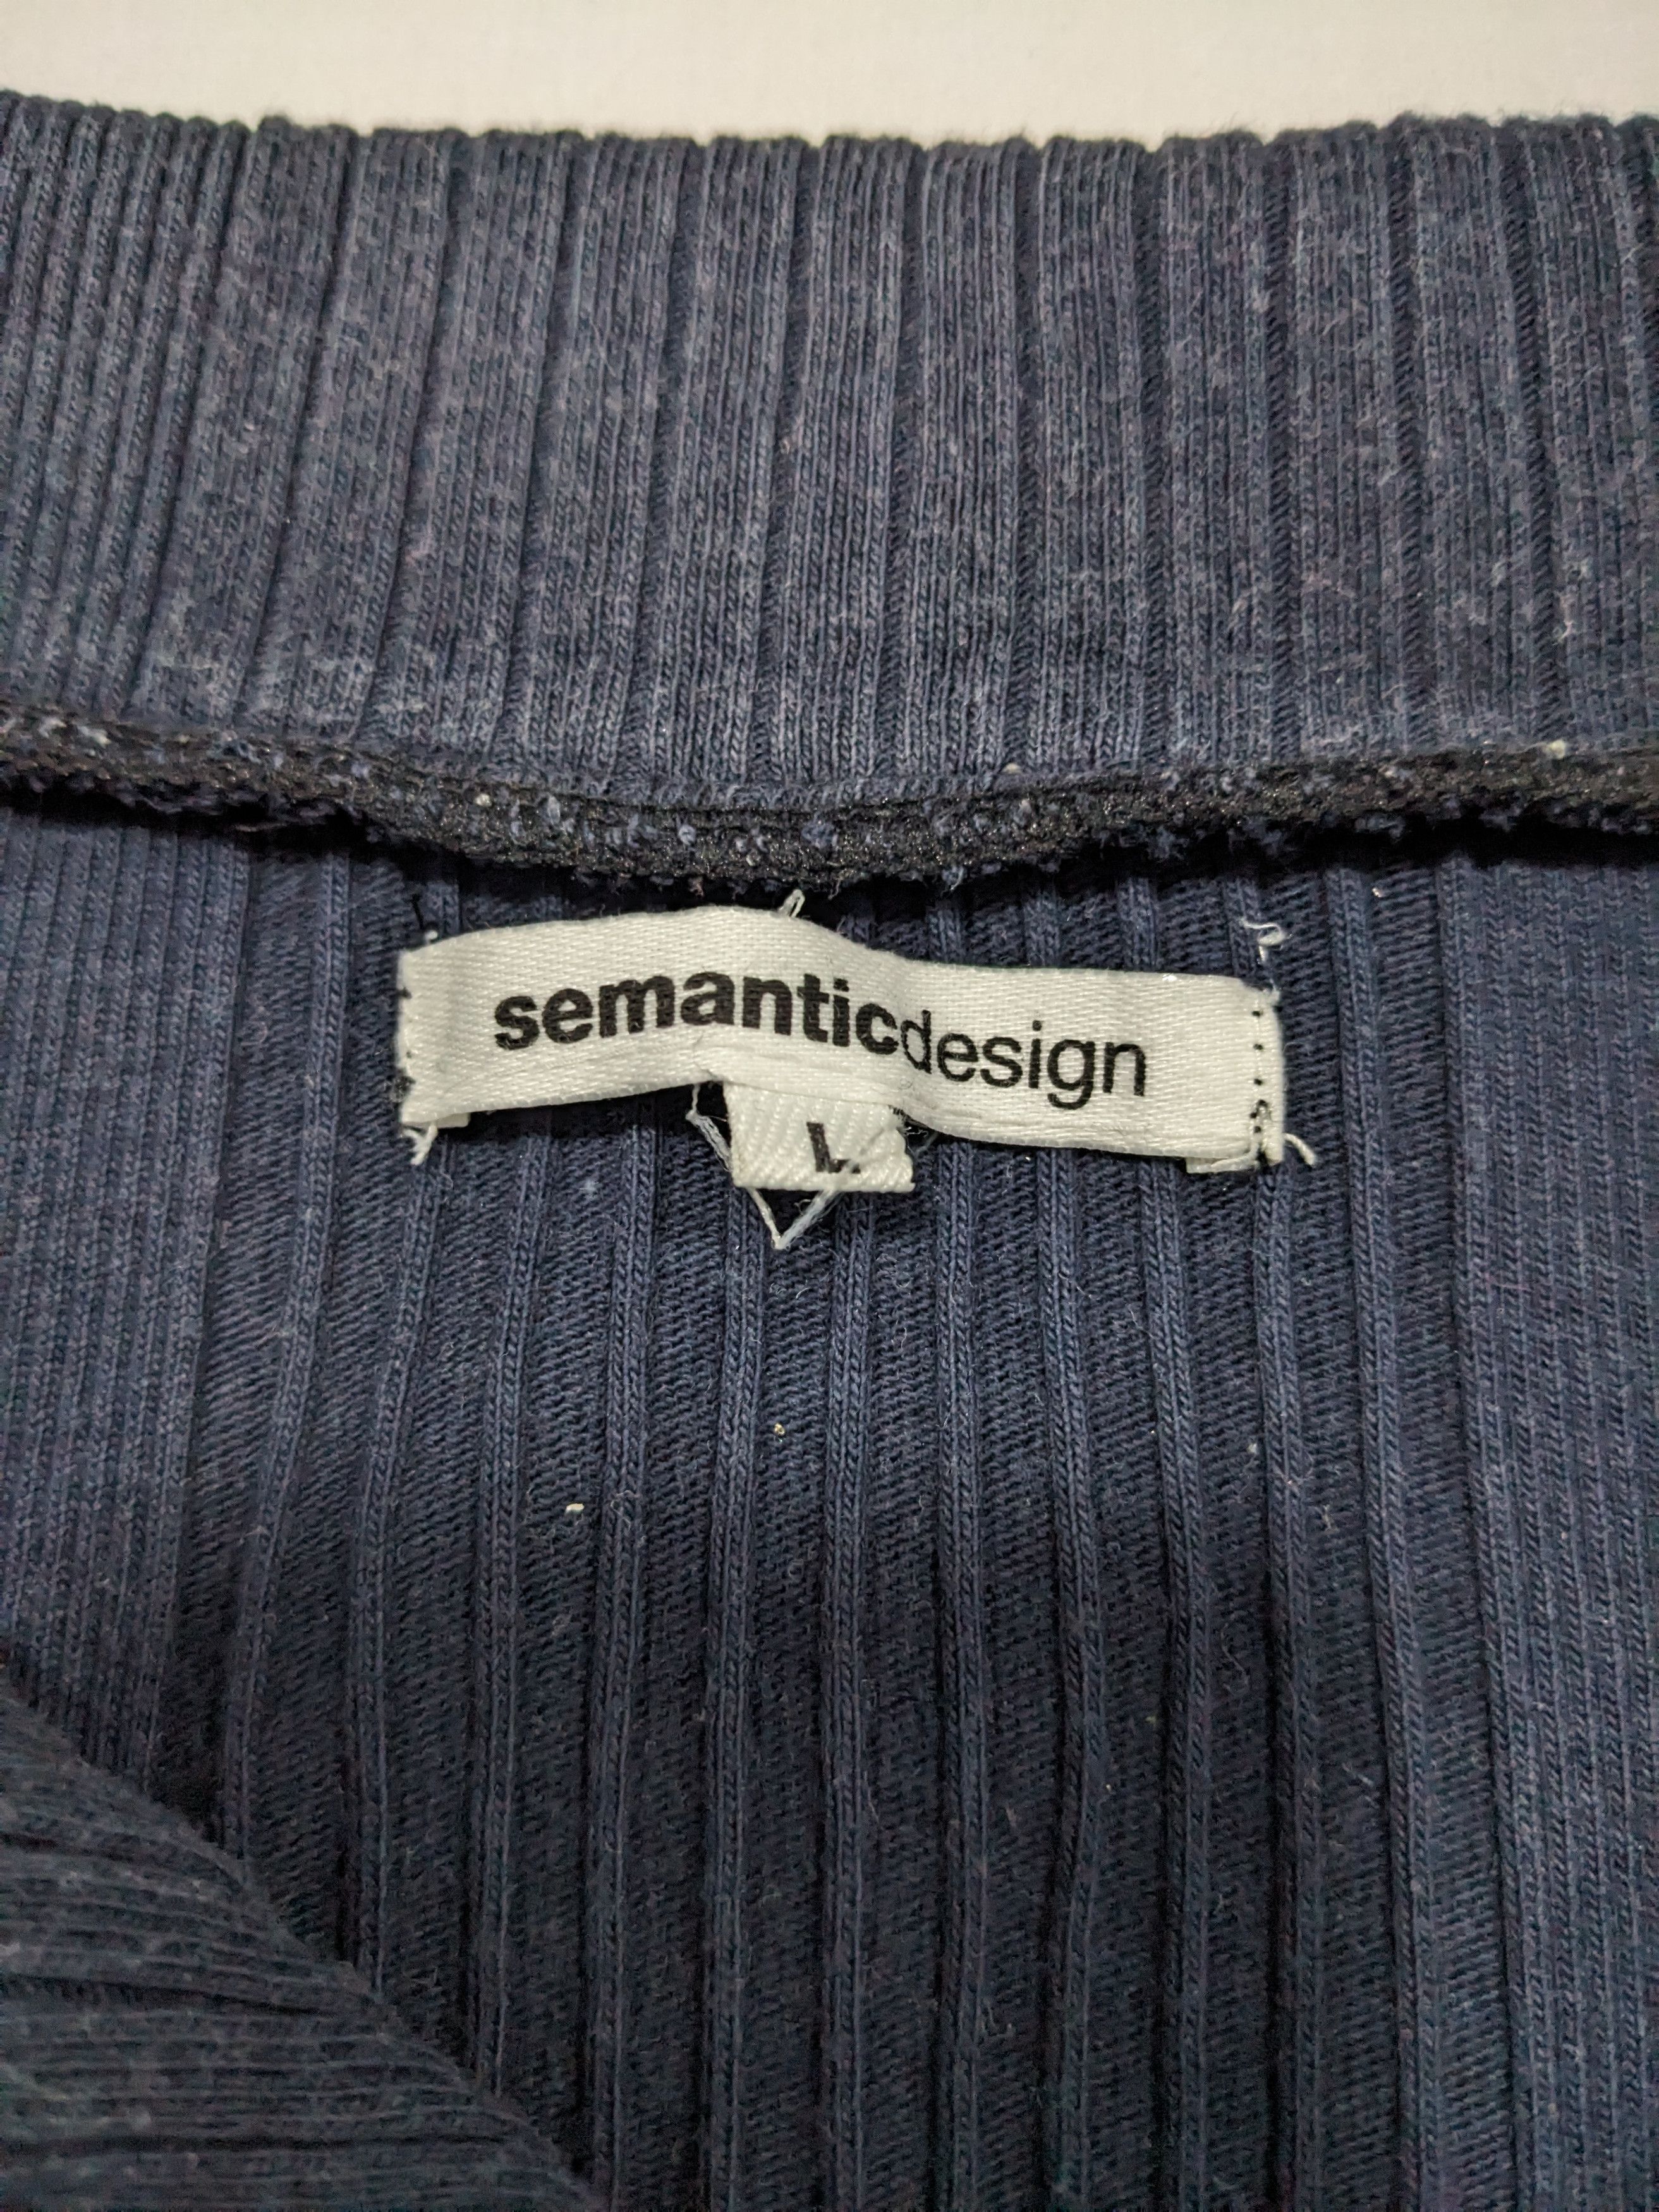 If Six Was Nine - Semantic Design lgb Style Punk Zipper Shirt - 7